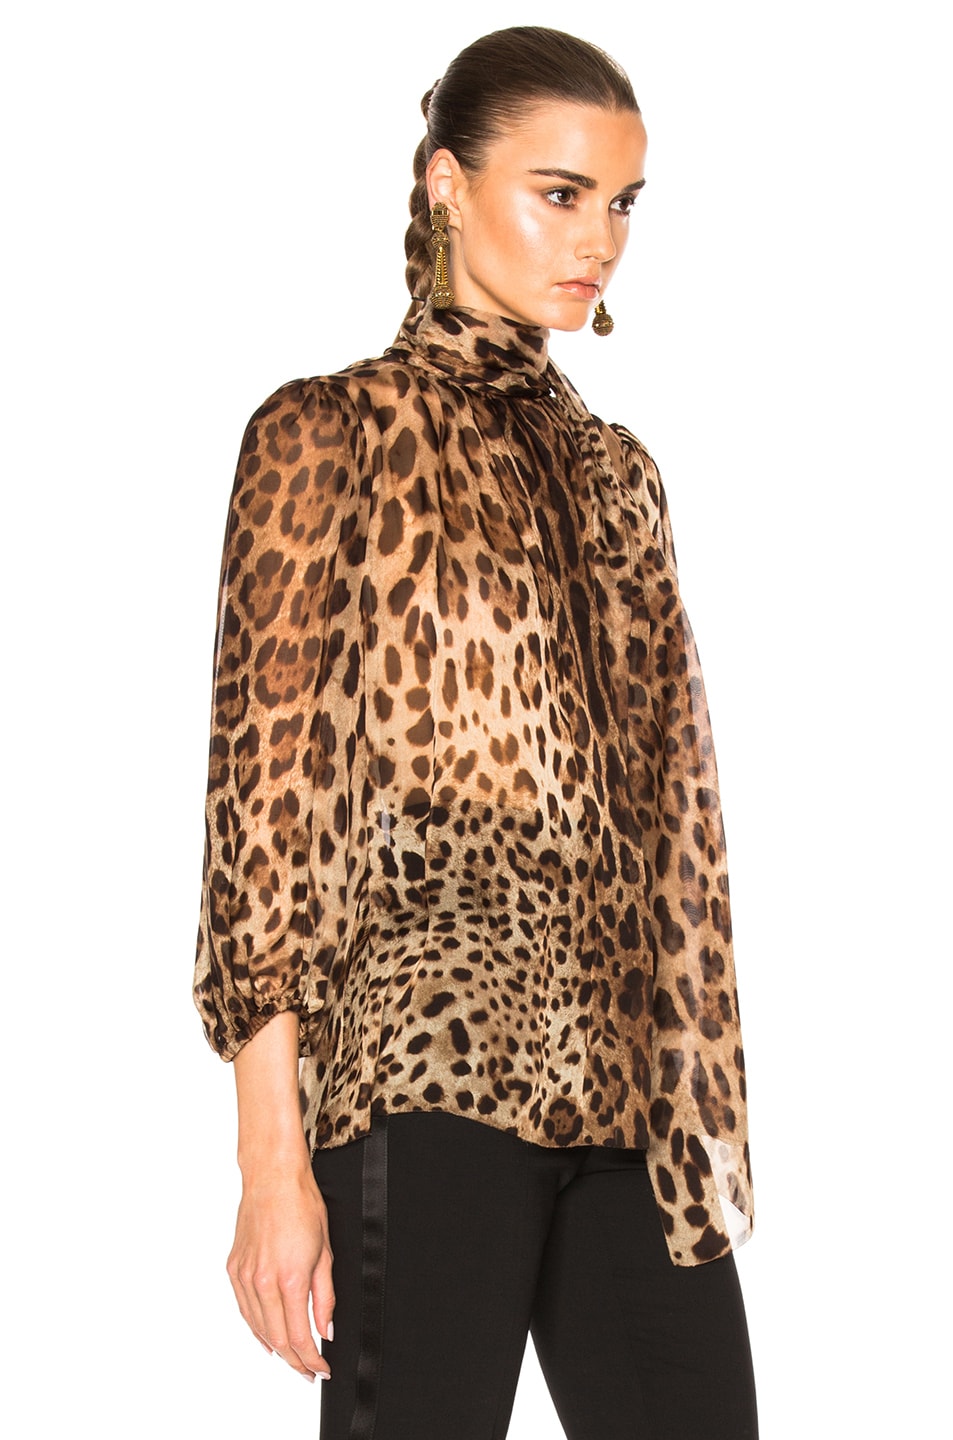 Dolce & Gabbana Chiffon Leopard Print Blouse in Natural | FWRD